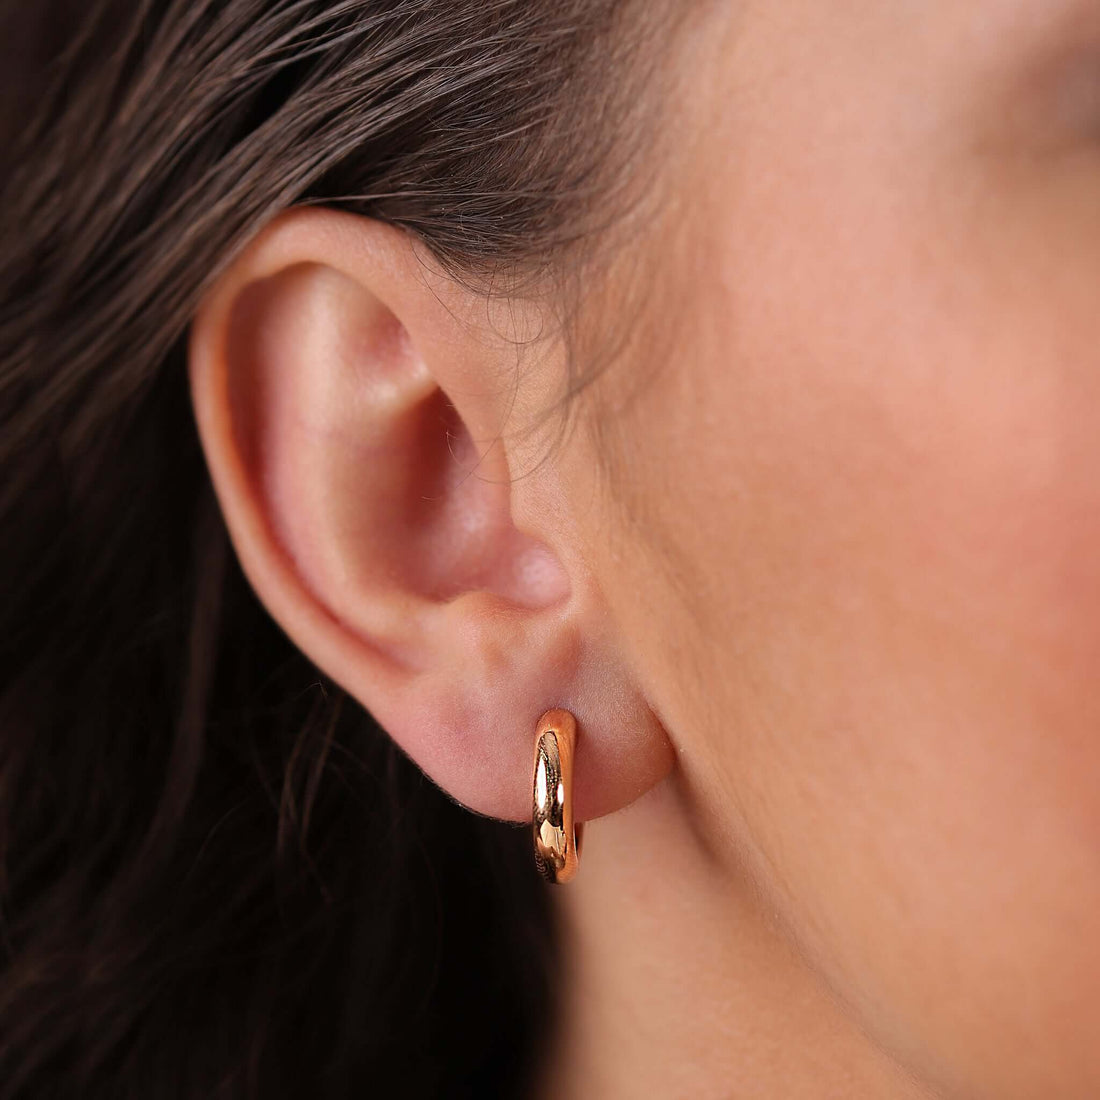 Jewelry Goldens Hoops | Medium Gold Earrings | 14K - Rose / Pair - earrings Zengoda Shop online from Artisan